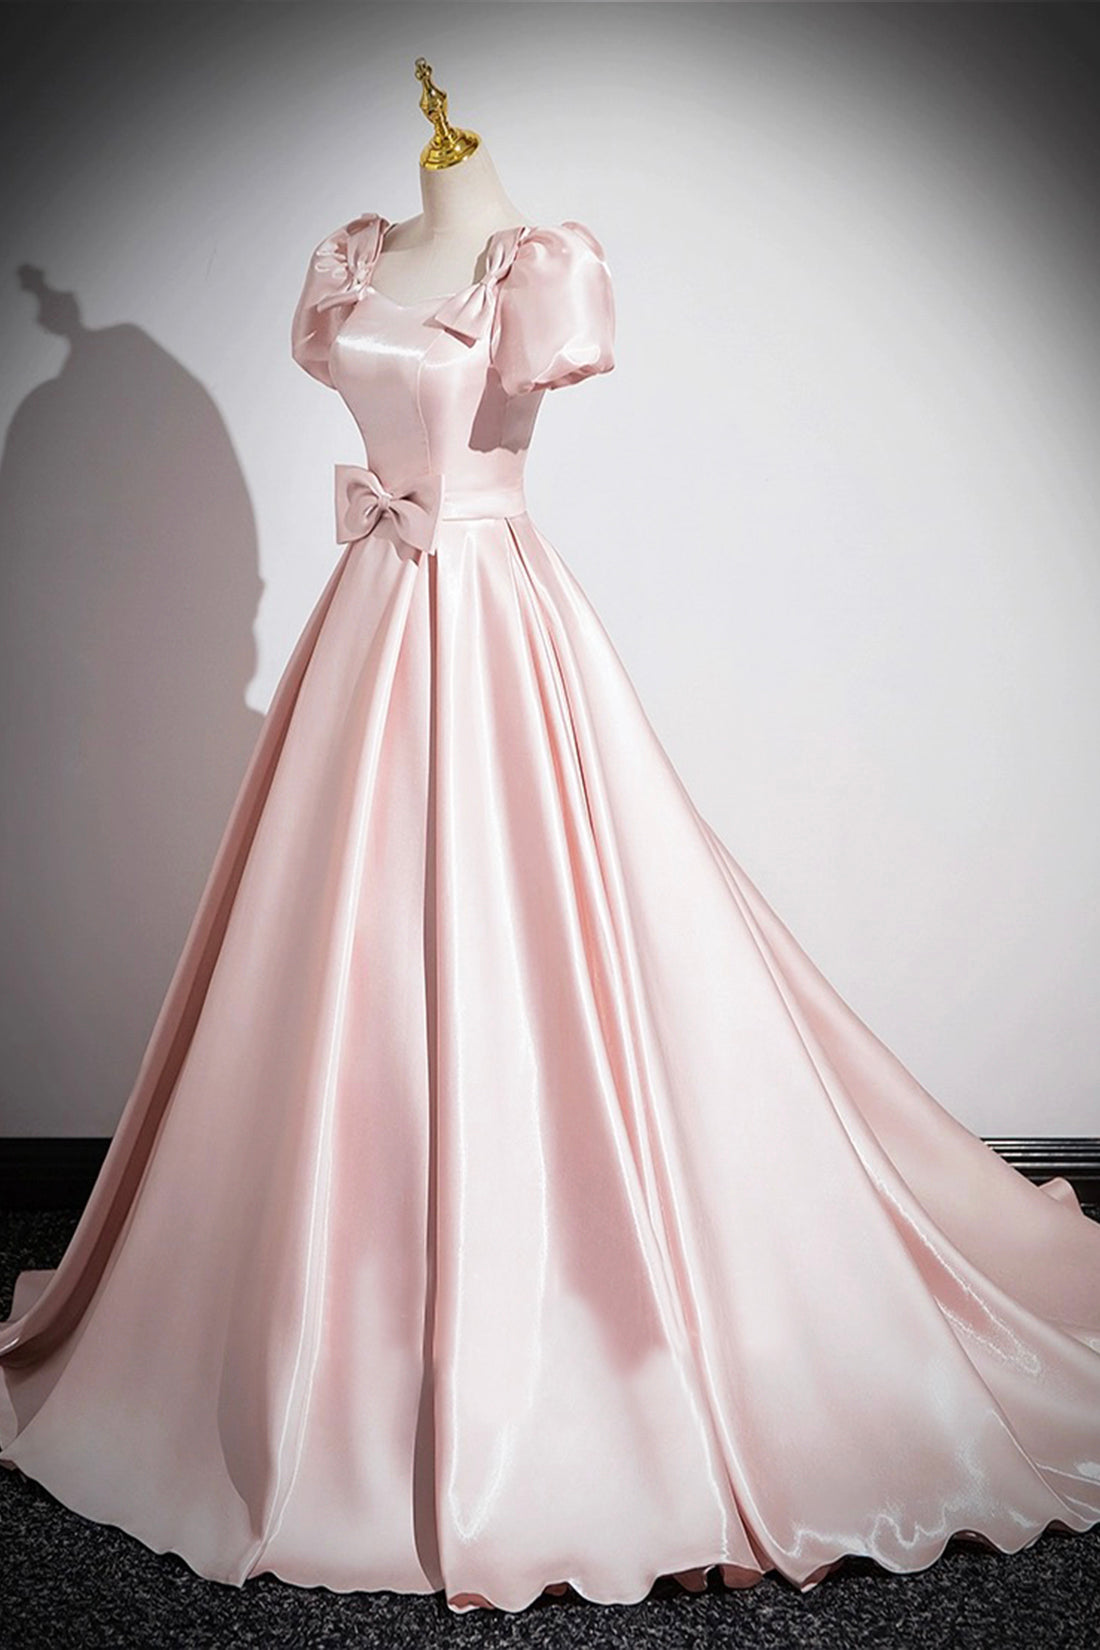 Pink Scoop Neckline Satin Floor Length Prom Dress, Pink Short Sleeve A-Line Party Dress